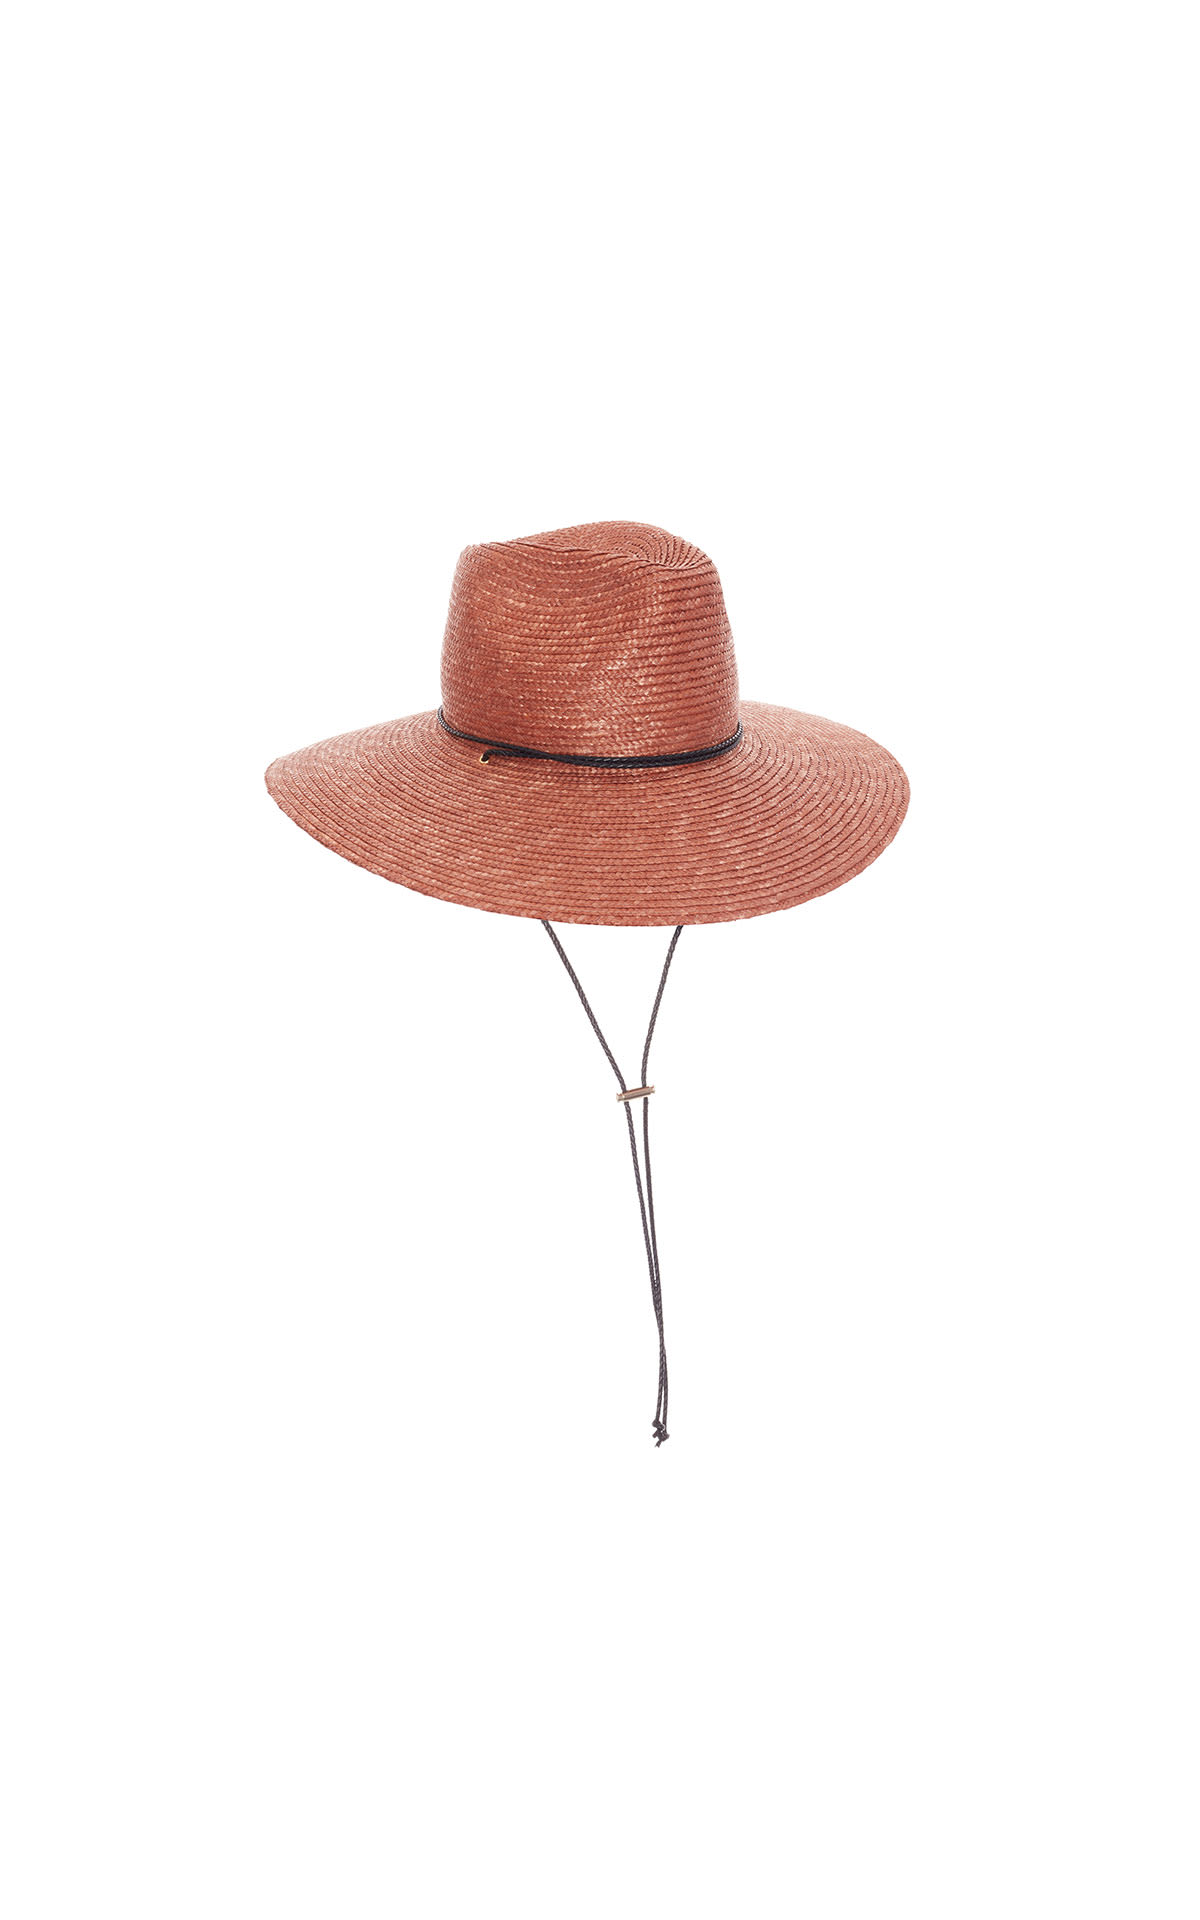 Eleventy Straw hat from Bicester Village